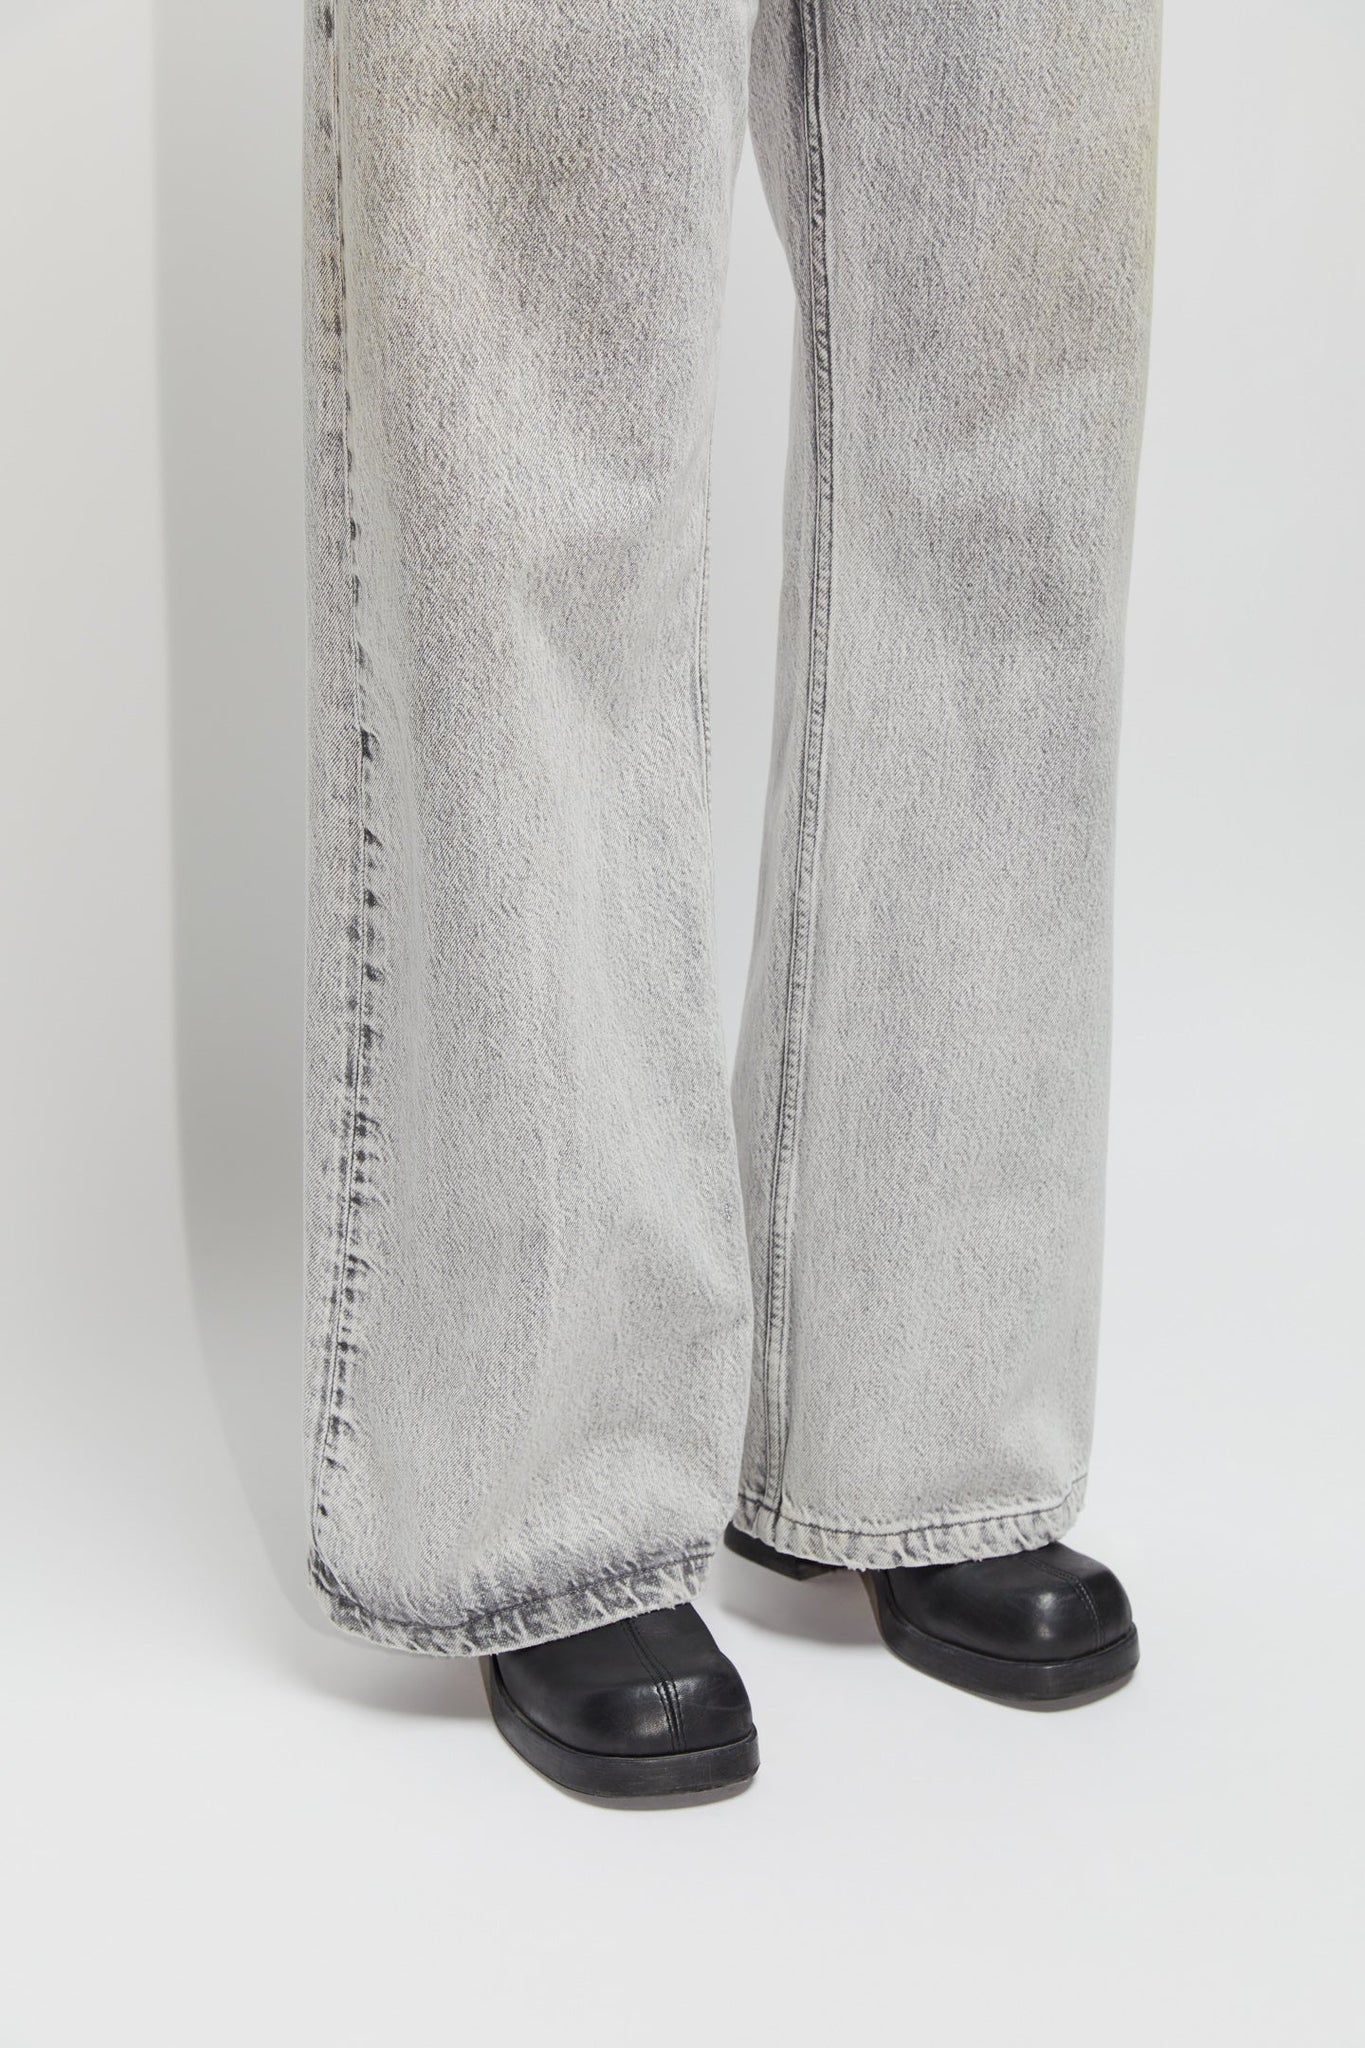 Skid jeans light grey stone